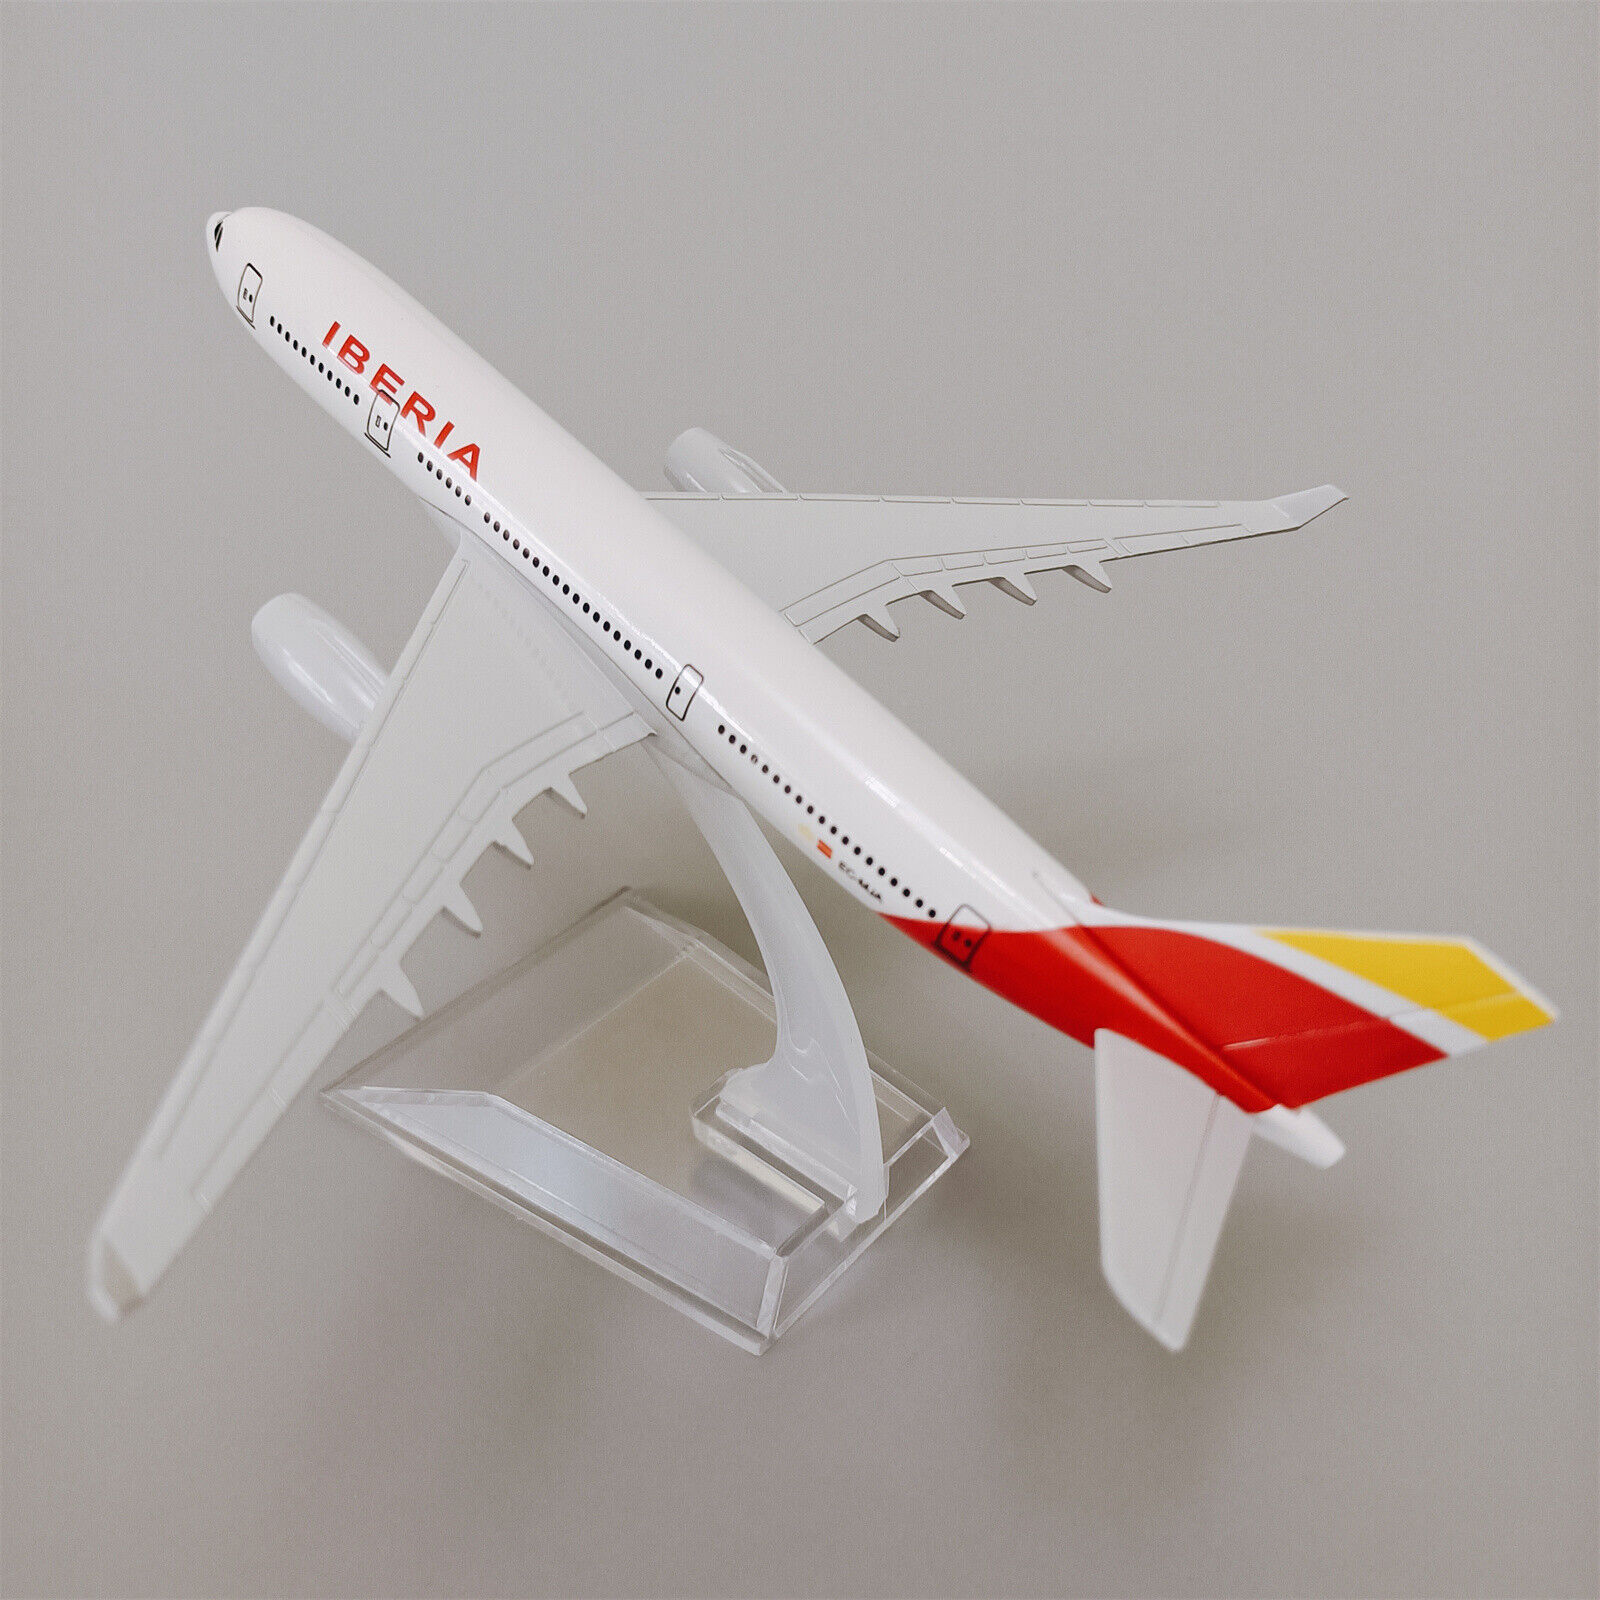 16cm plane model Air Spain Iberia Airbus A330 Airlines Metal aircraft airplane